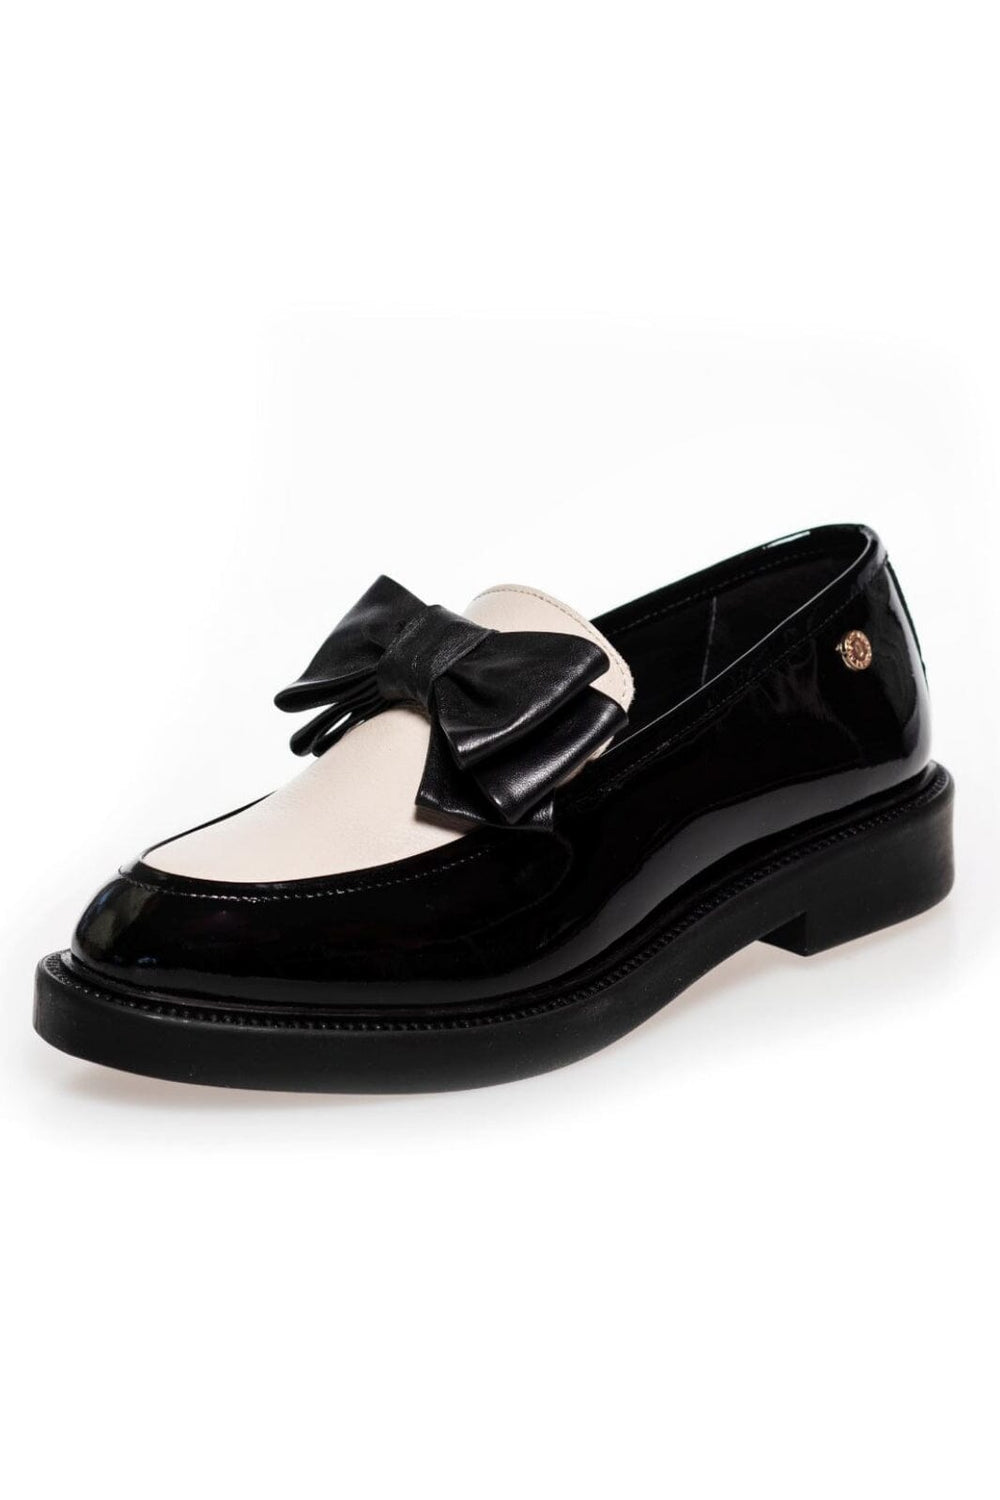 Forudbestilling - Copenhagen Shoes - Like Going Out - 0010 Black / Off White / Black Loafers 